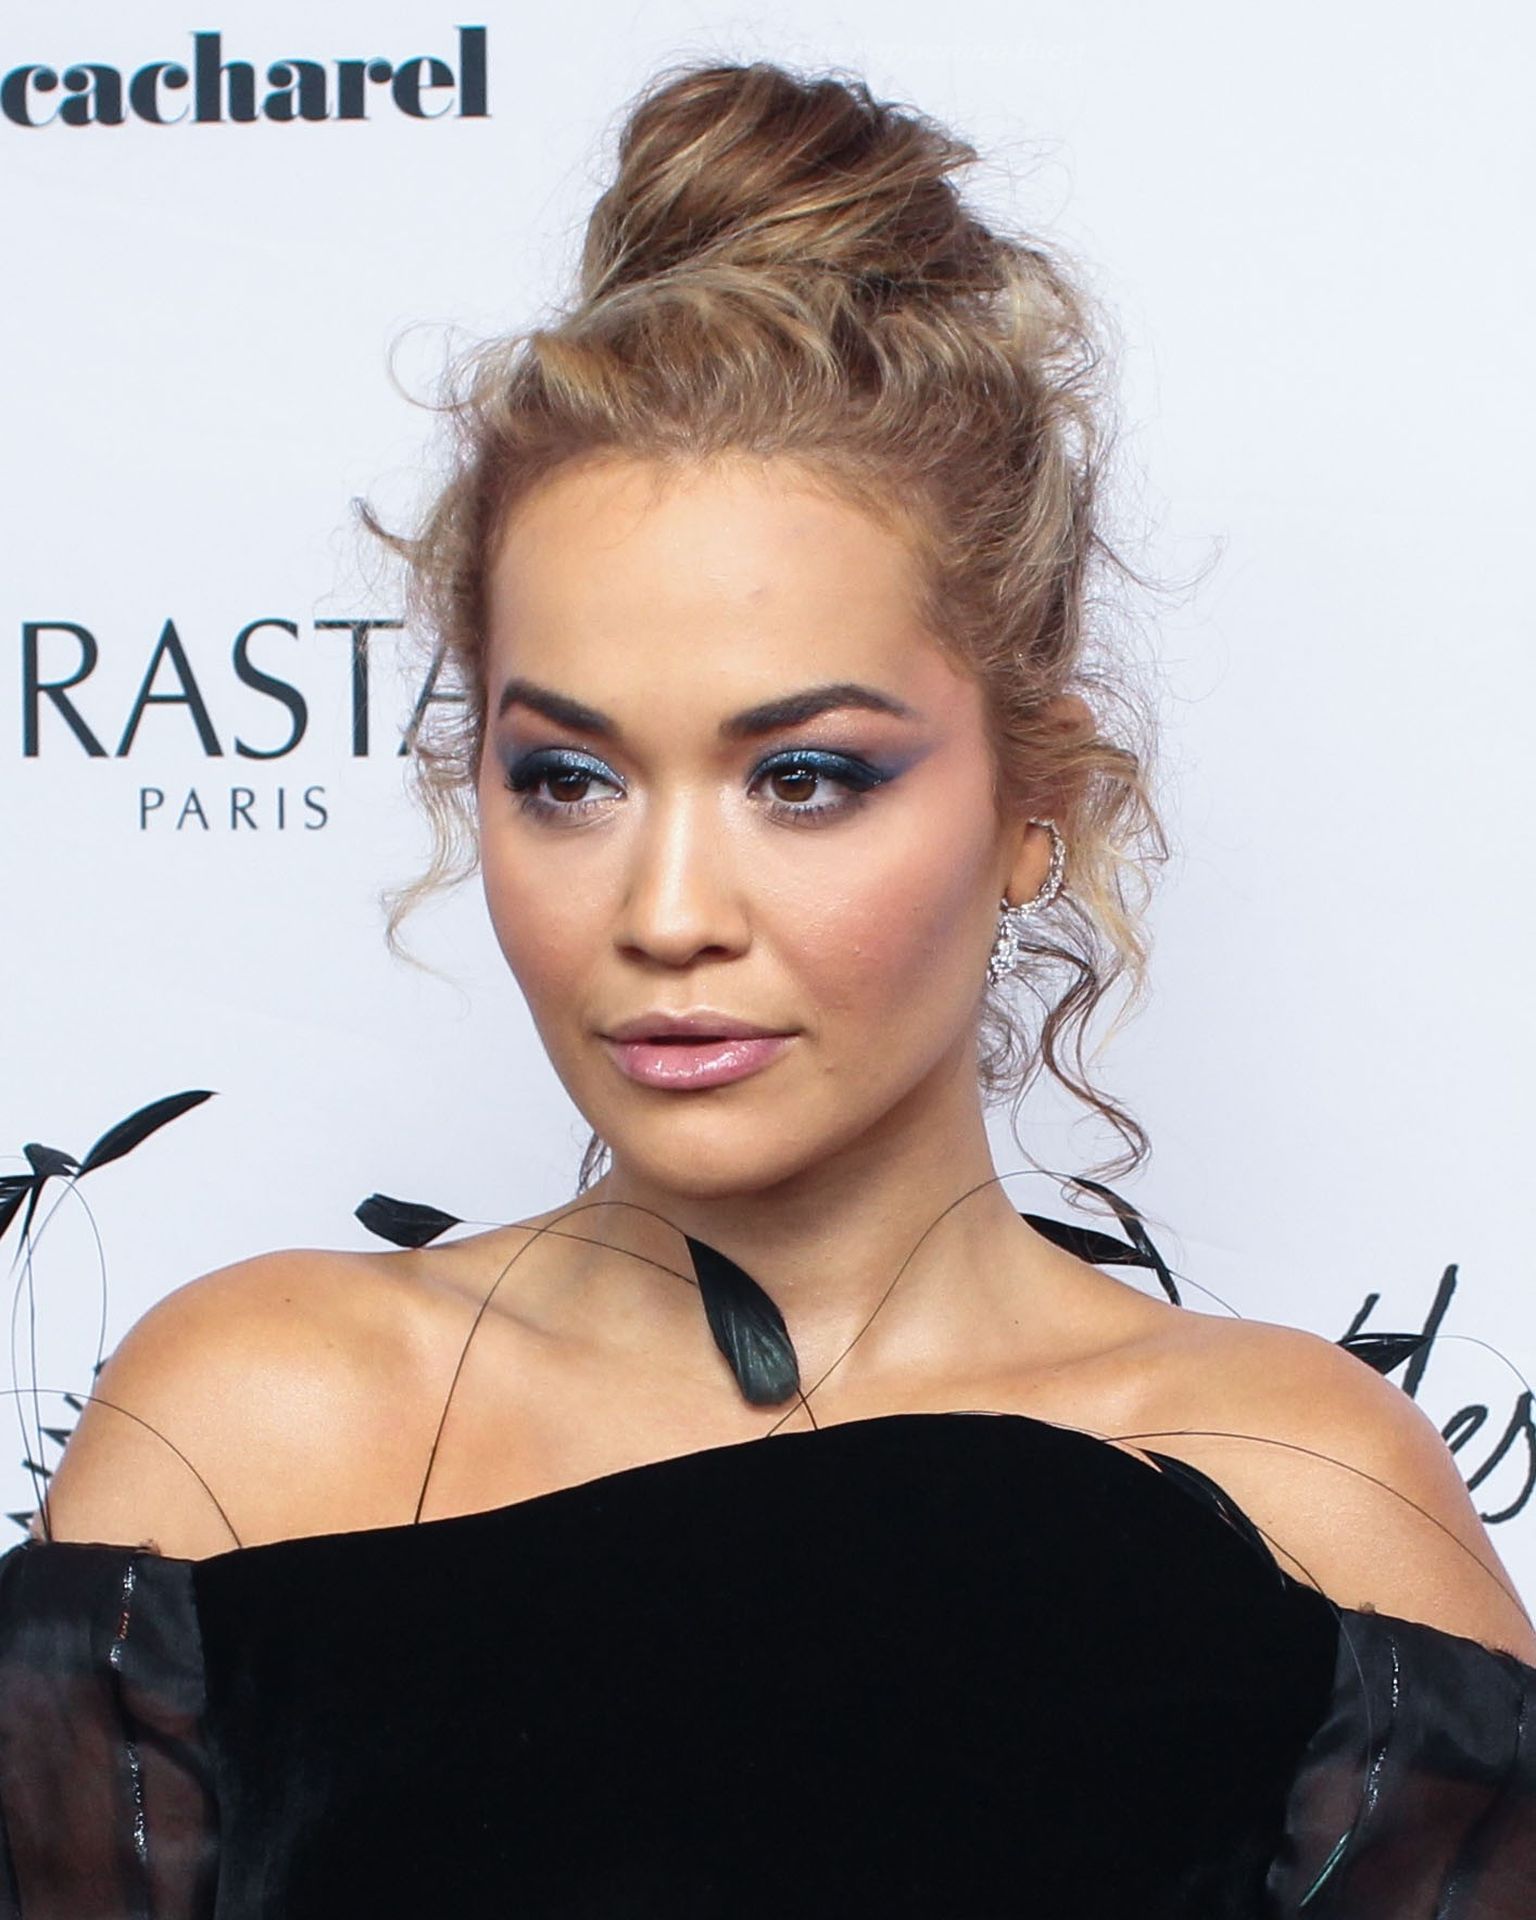 Rita Ora Stuns at The Daily Front Row 8th Annual Fashion Media Awards (71 Photos)